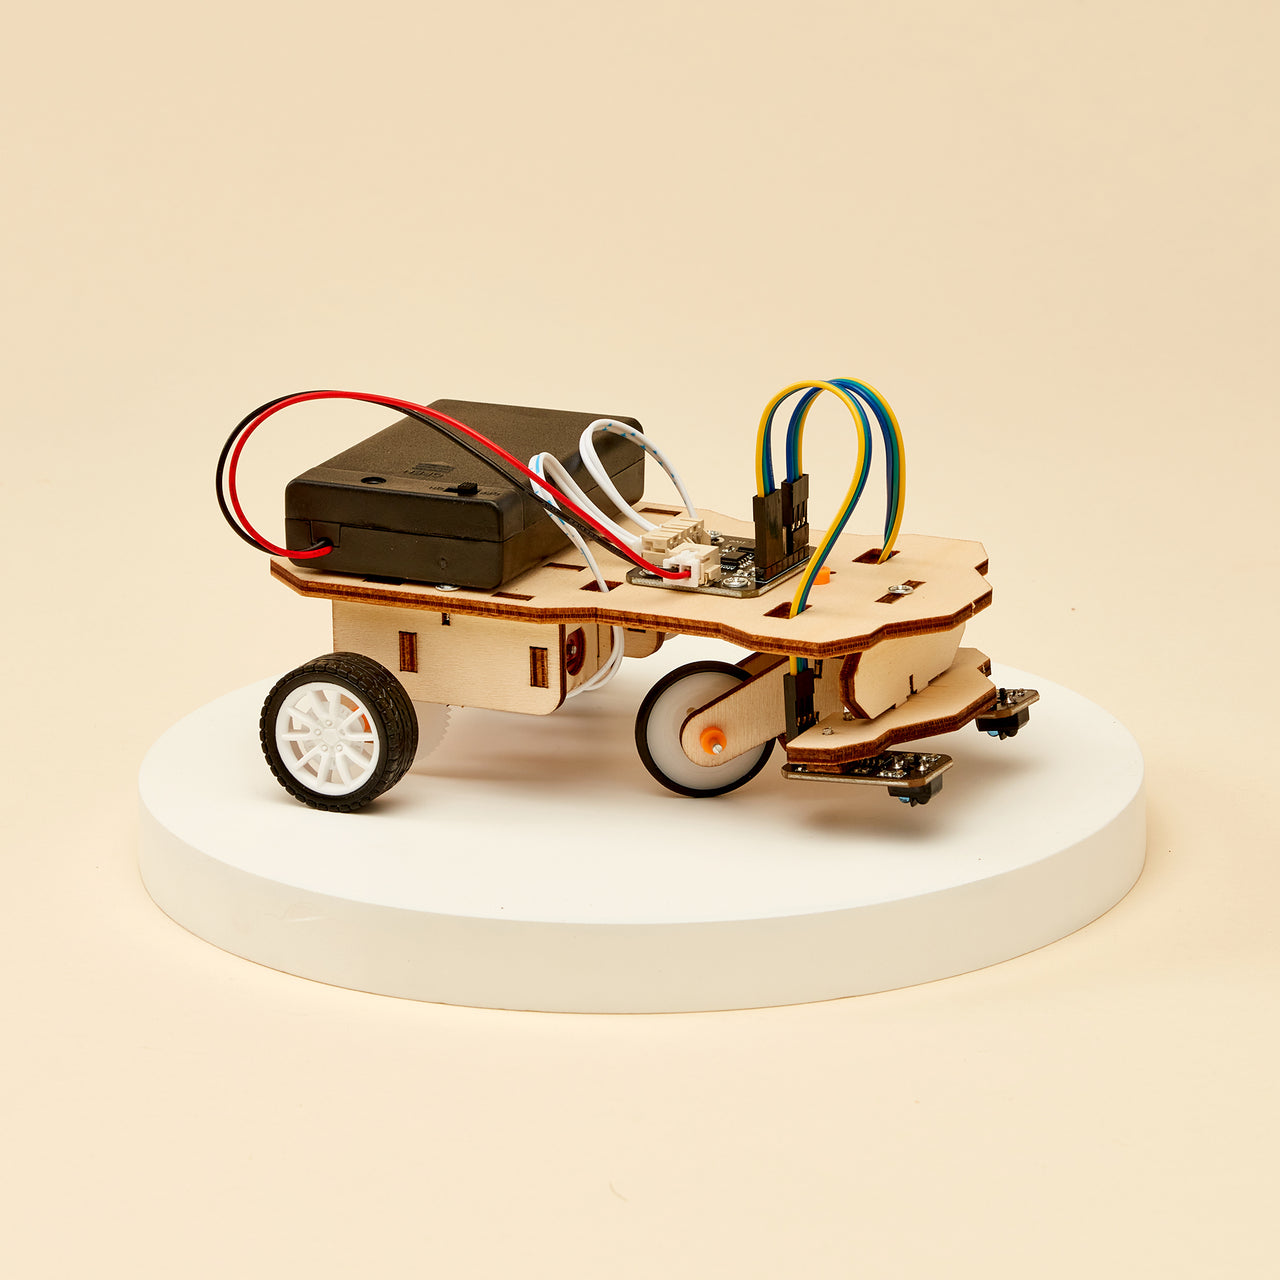 CreateKit Line Follower Robot DIY Kit